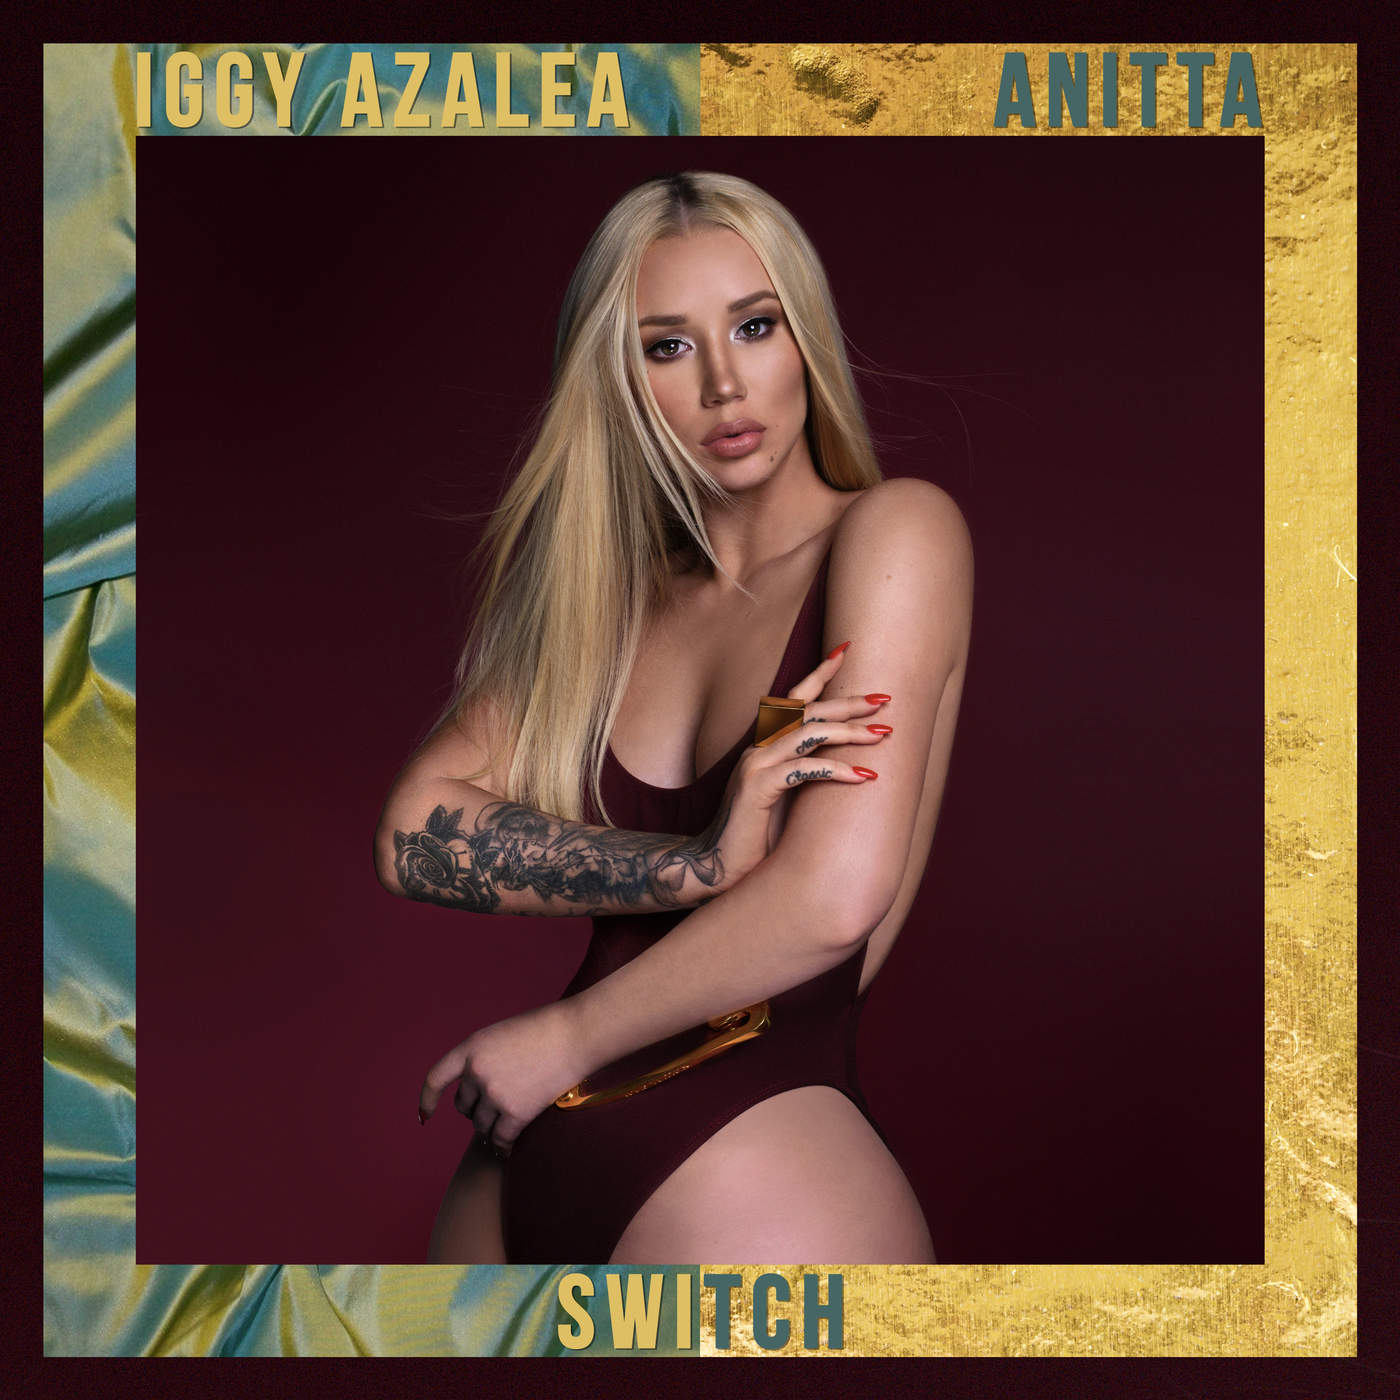 Iggy Azalea featuring Anitta — Switch cover artwork